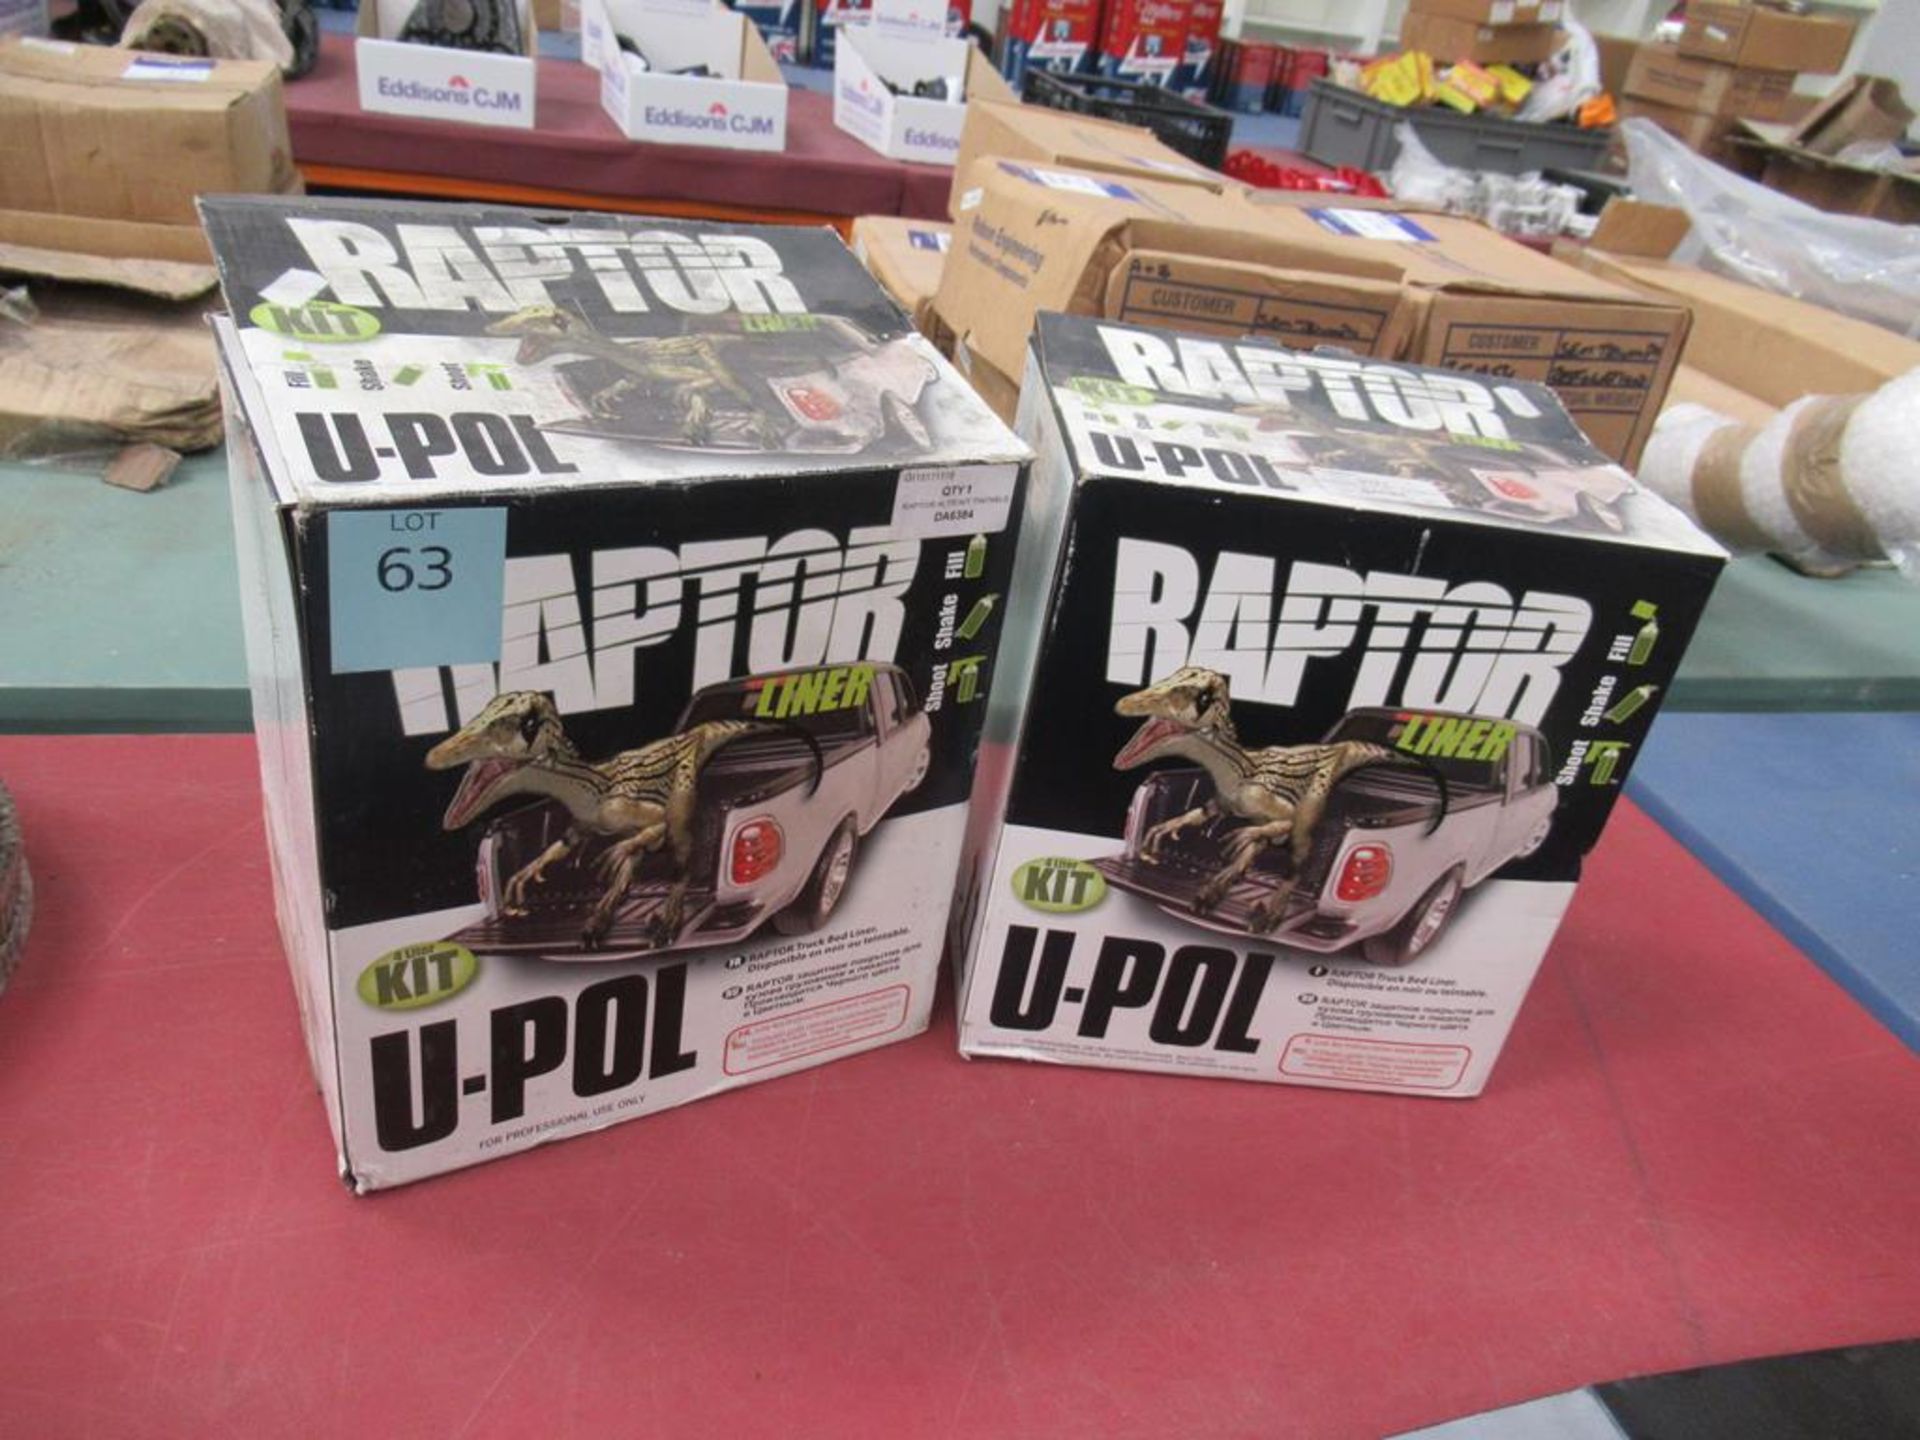 2x boxes of Raptor Line Paint ( 1x boxed, 1 litre missing)